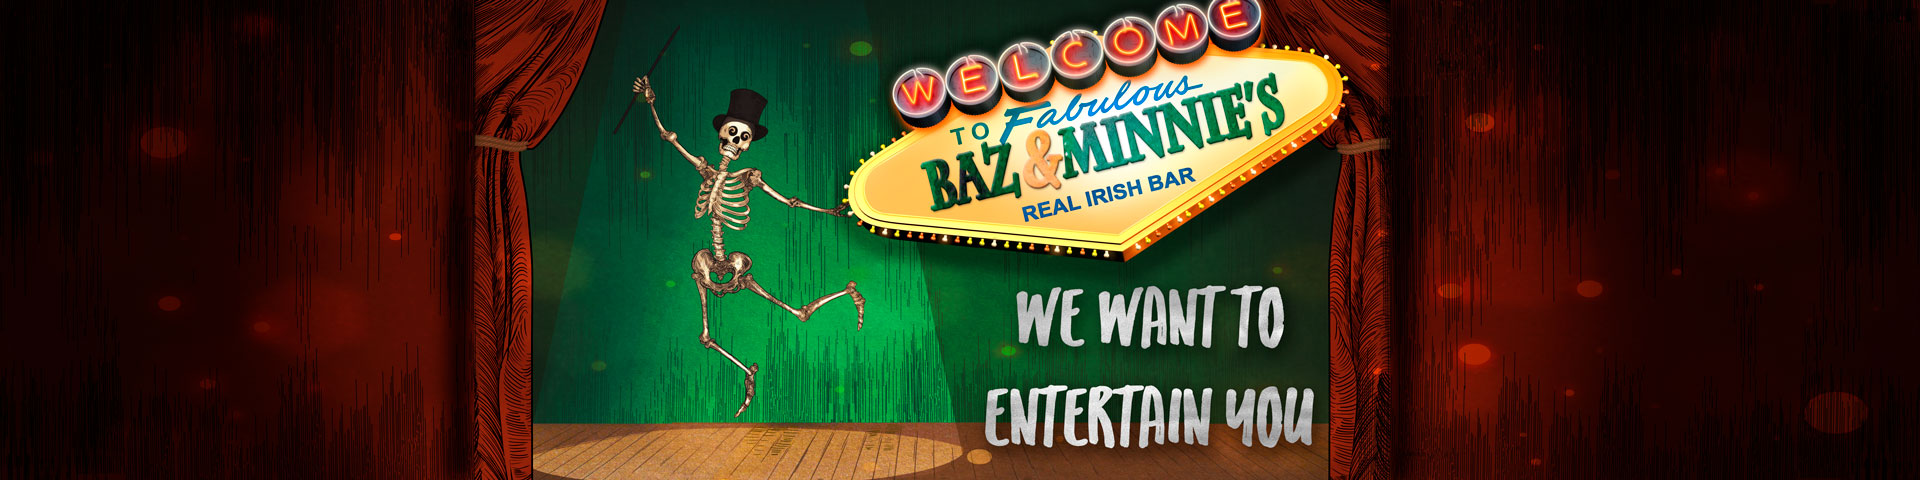 Entertainment at Baz & Minnie's Irish Bar